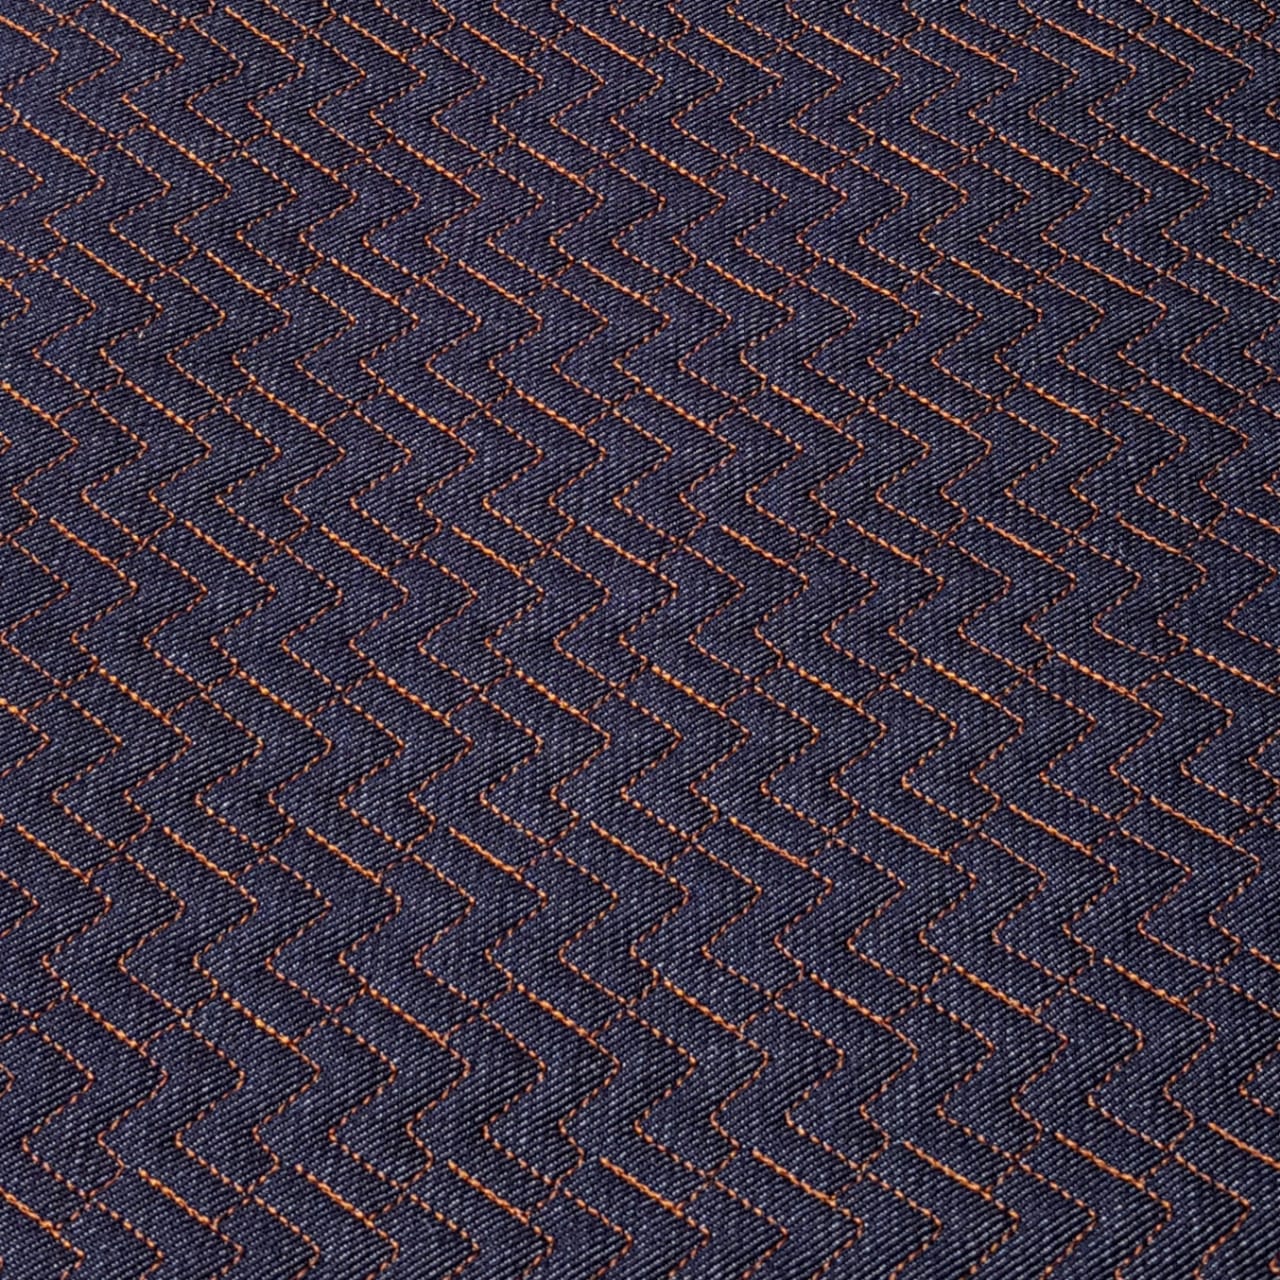 Jeans matelassado / tijolinhos - 50x150cm